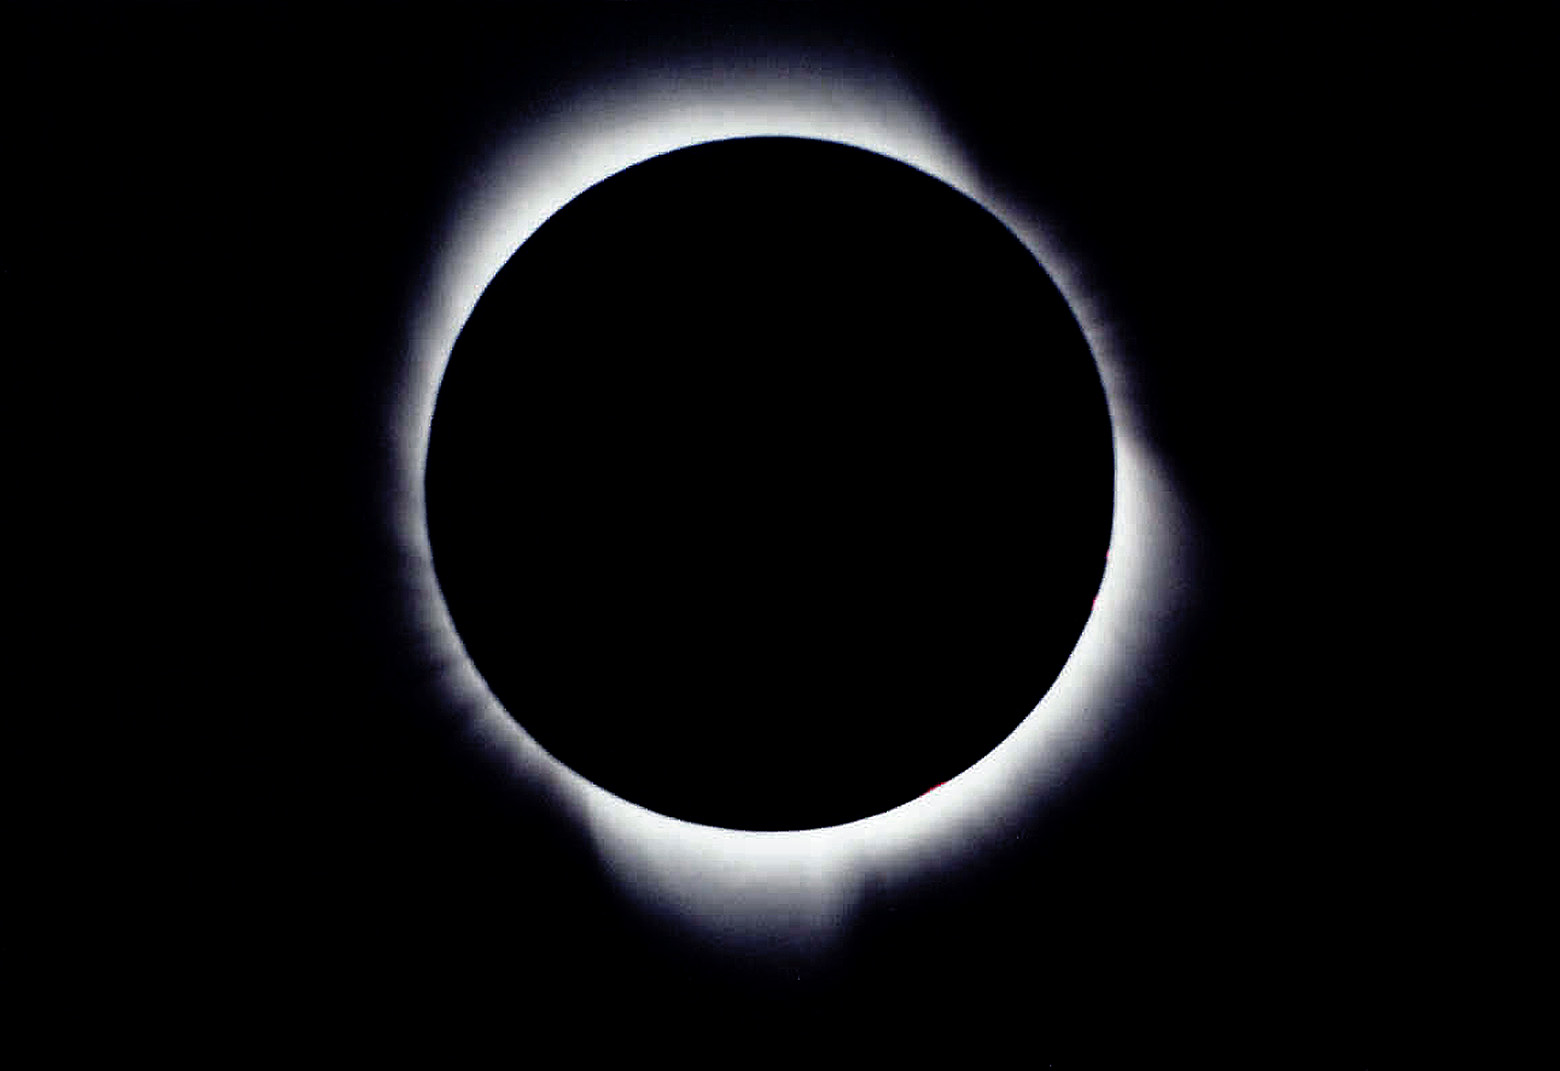 Eclipse 1994 - A67 - Full Corona- Medium